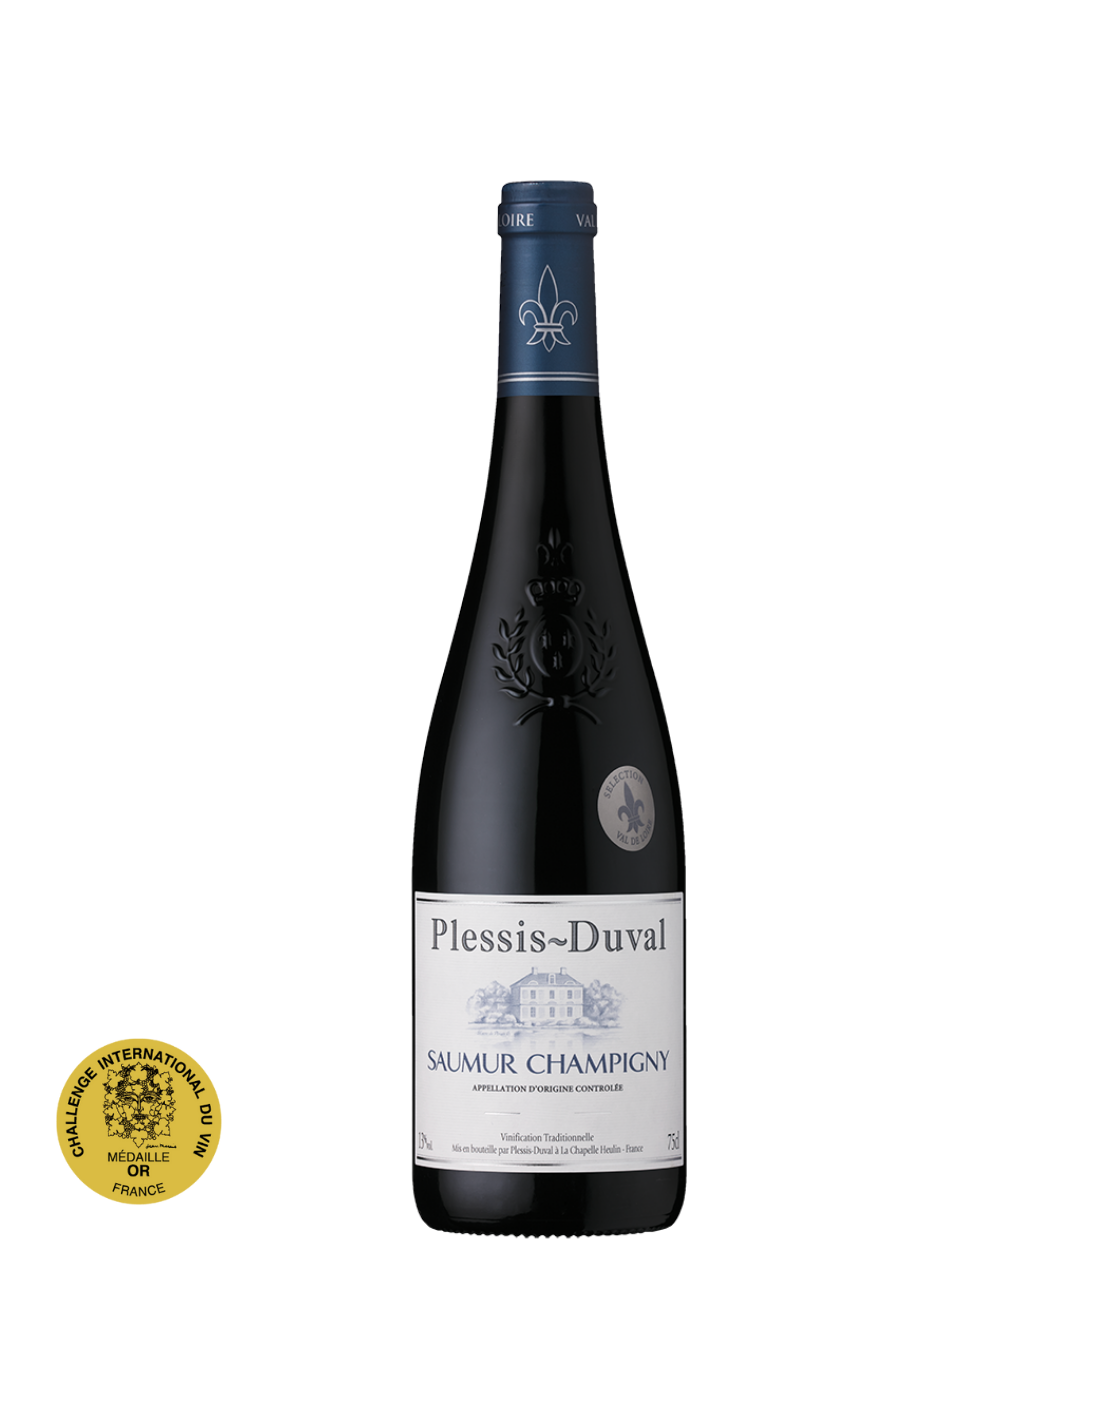 Vin rosu sec, Cabernet Franc, Plessis Duval Saumur-Champigny, 0.75L, 12.5% alc., Franta alcooldiscount.ro